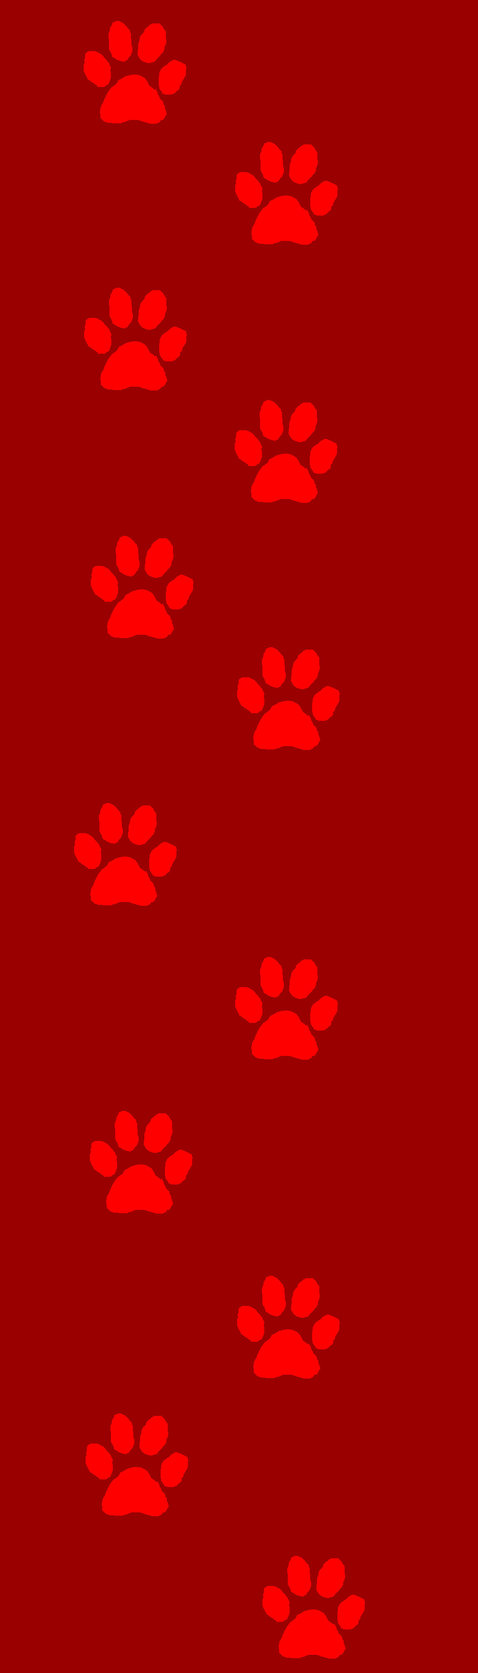 Red Dog Paw Print Custom Box Background By Kawaii 0kami